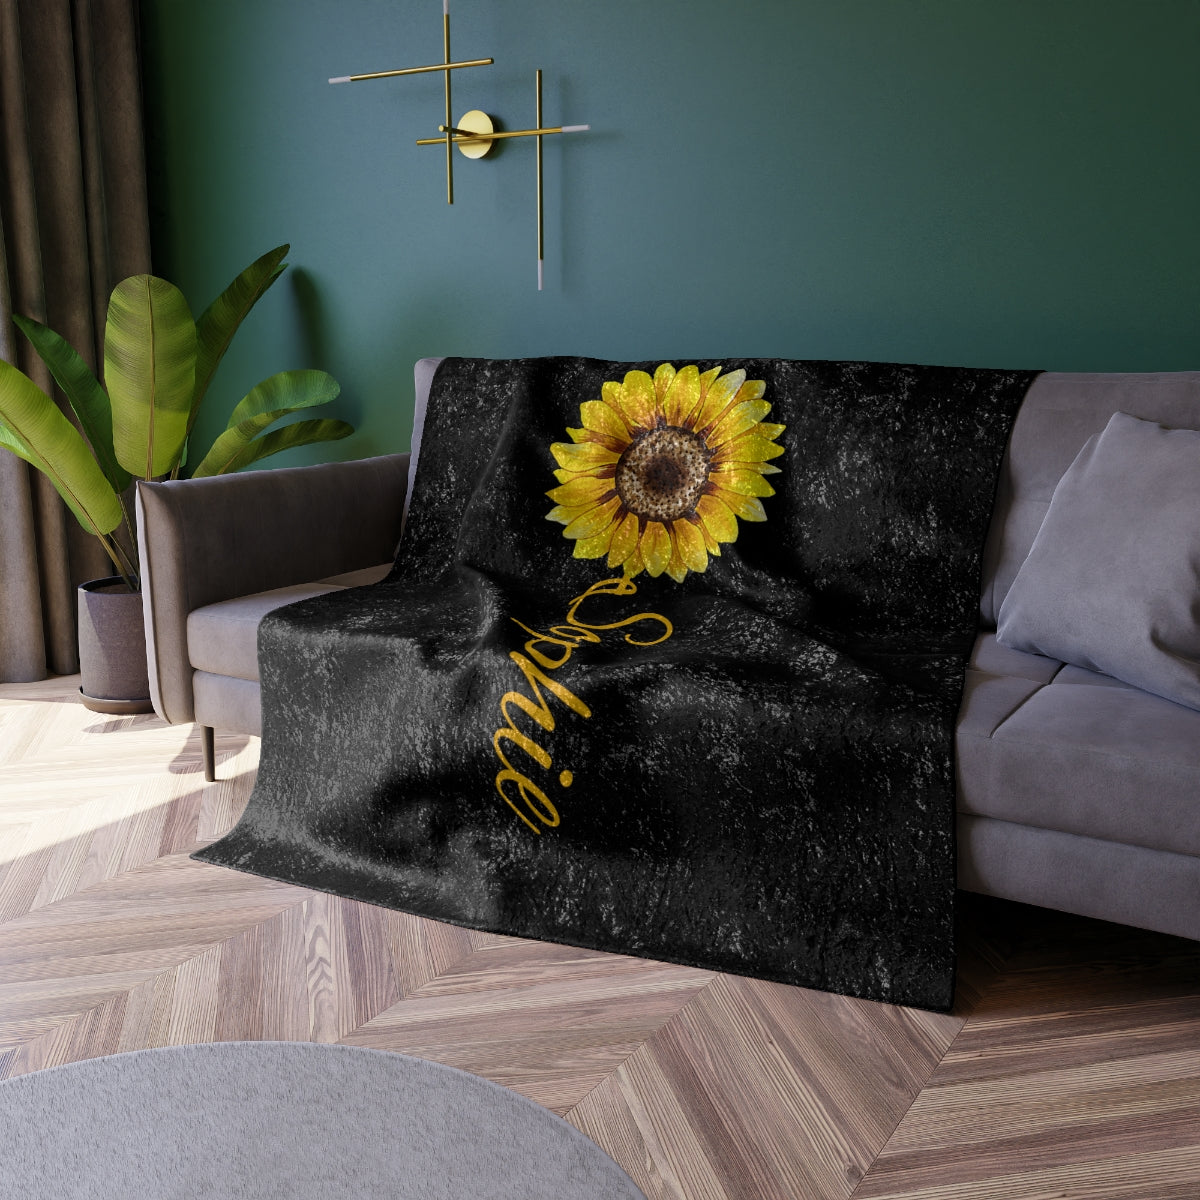 Personalized Blanket / Sunflower Blanket